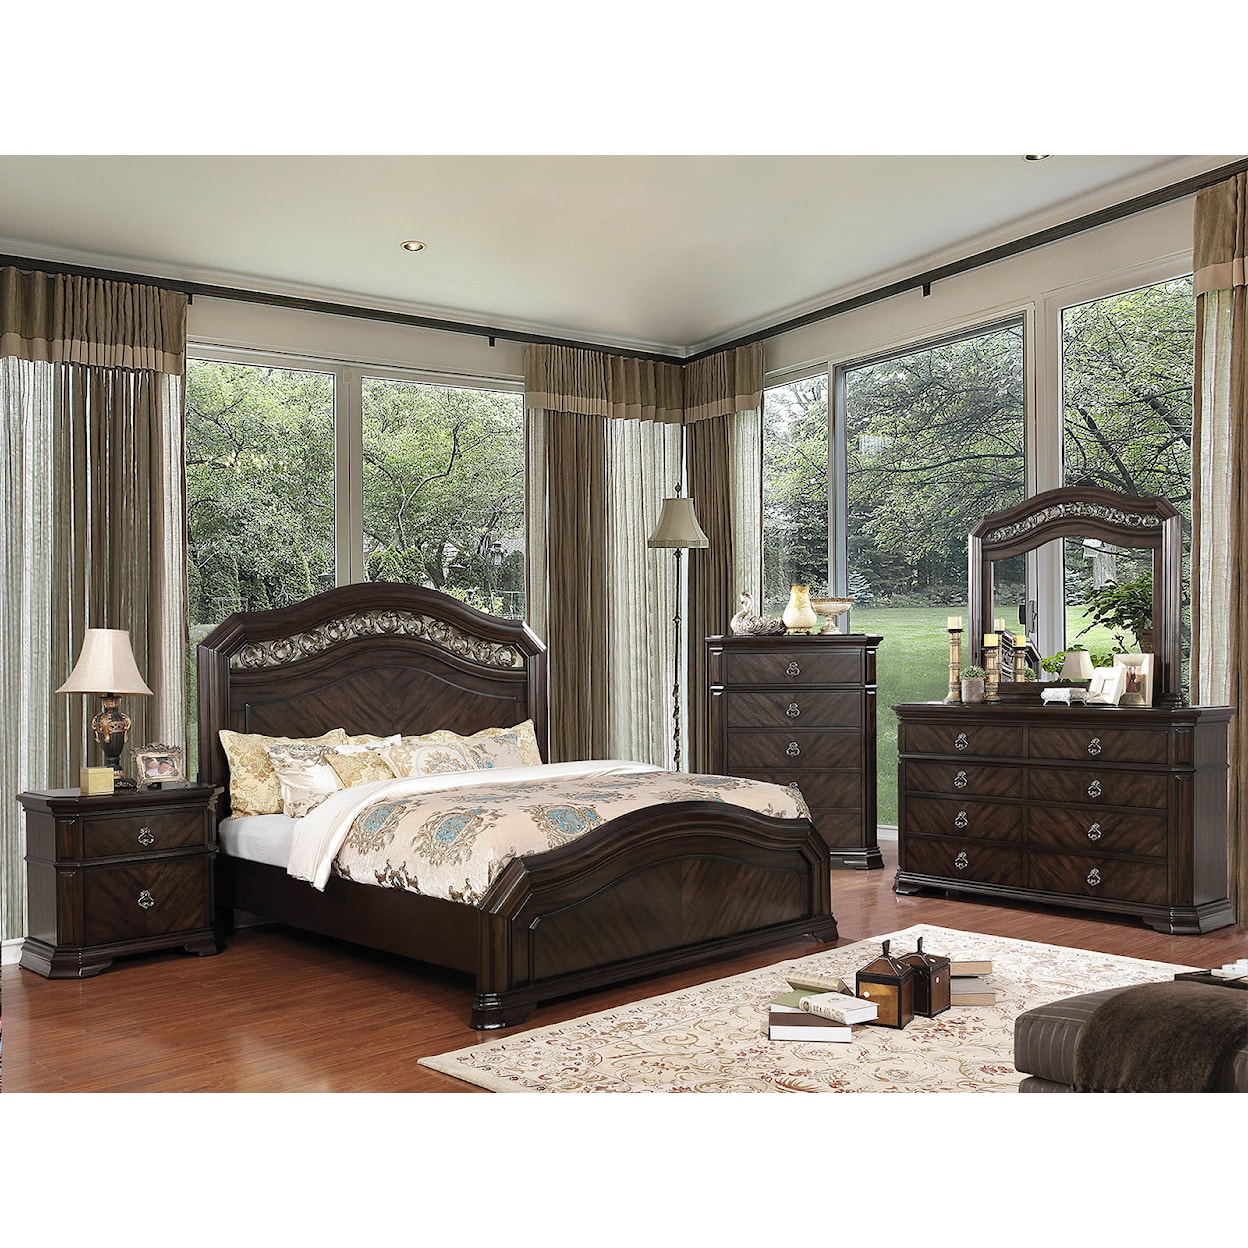 Furniture of America Calliope Queen Bedroom Set